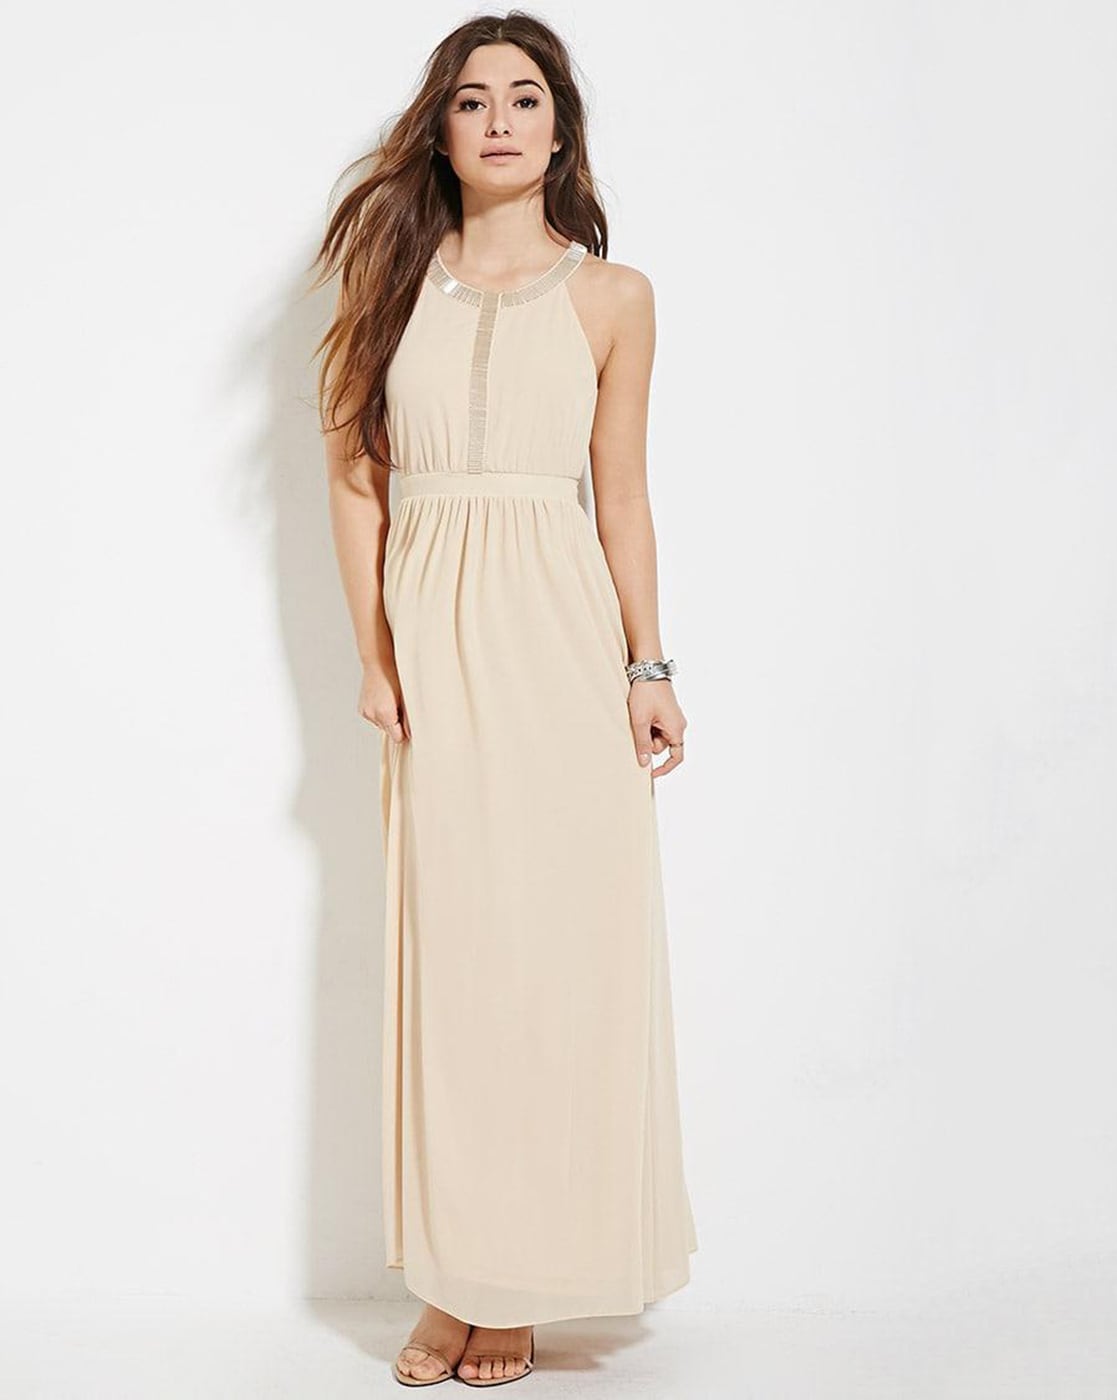 Buy OffWhite Dresses for Women by Forever 21 Online  Ajiocom